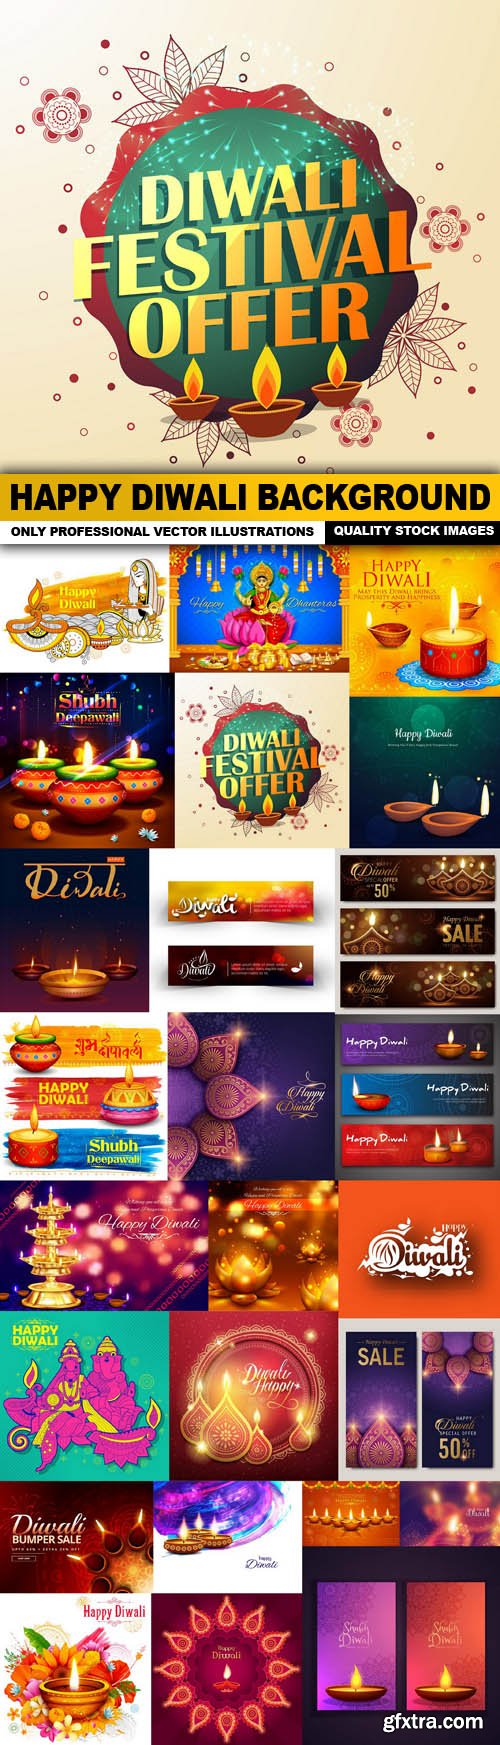 Happy Diwali Background - 25 Vector